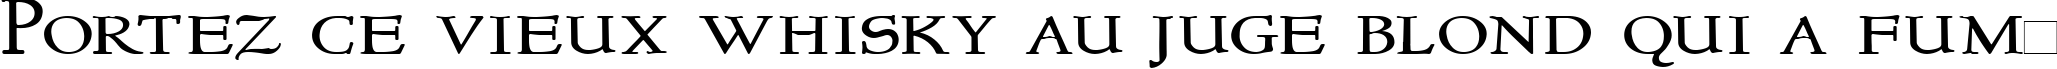 Пример написания шрифтом NewStyleSmallCaps текста на французском